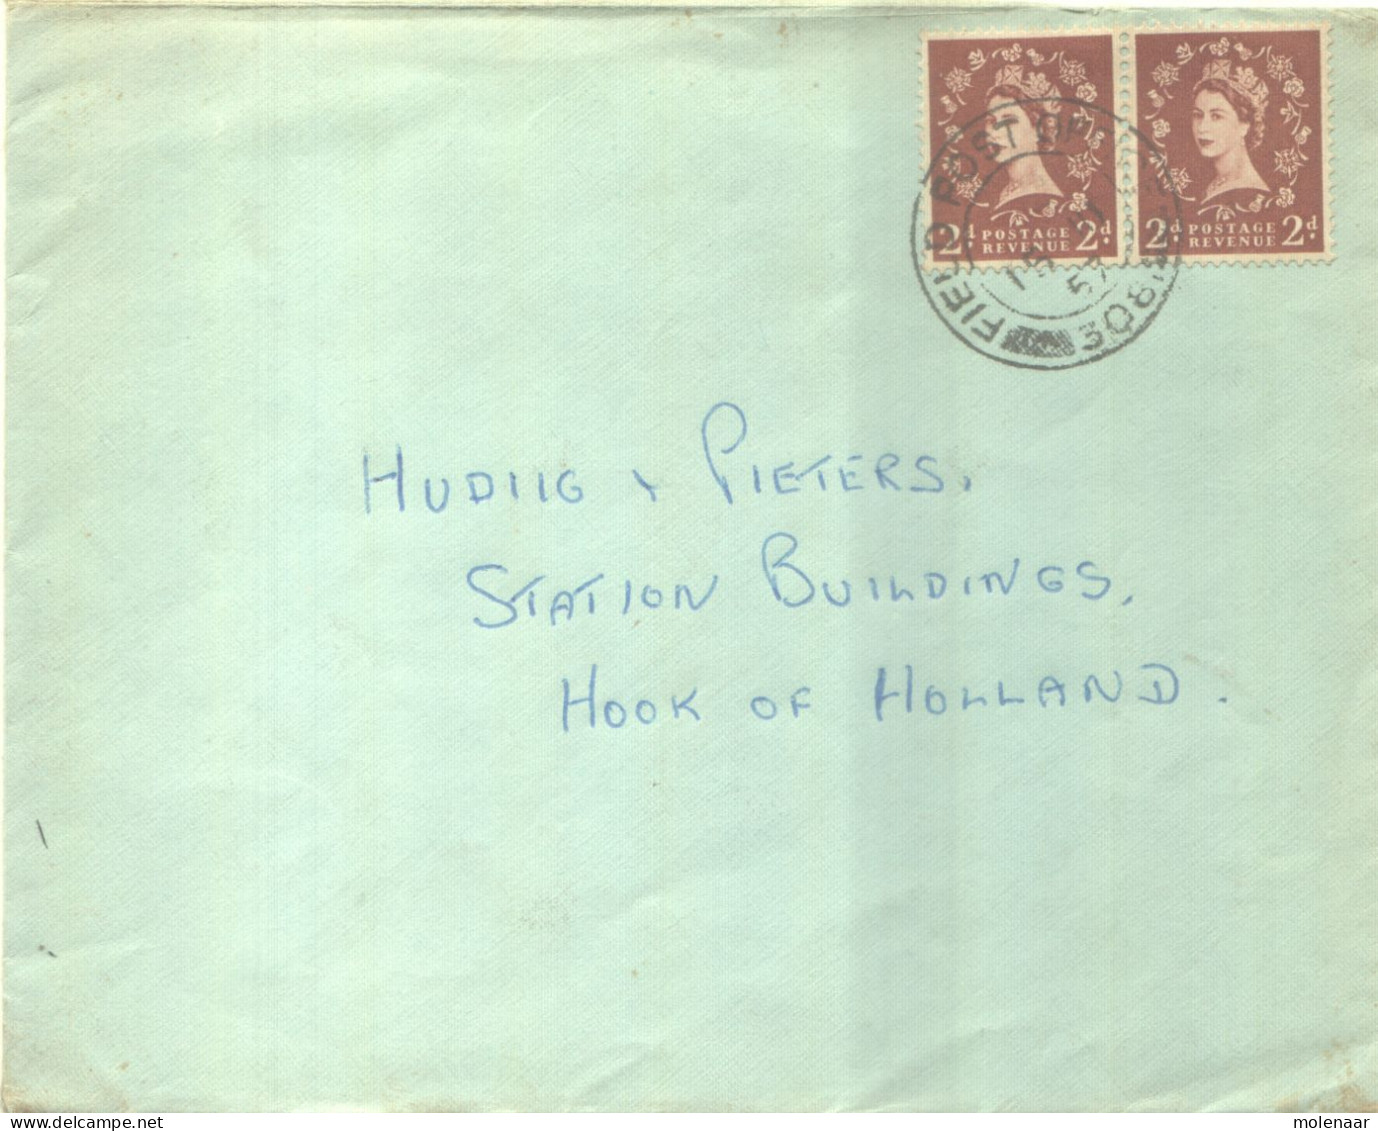 Postzegels > Europa > Groot-Brittannië > 1952-2022 Elizabeth II > 1971-1980  > Brief Met 2 Postzegels (16814) - Briefe U. Dokumente